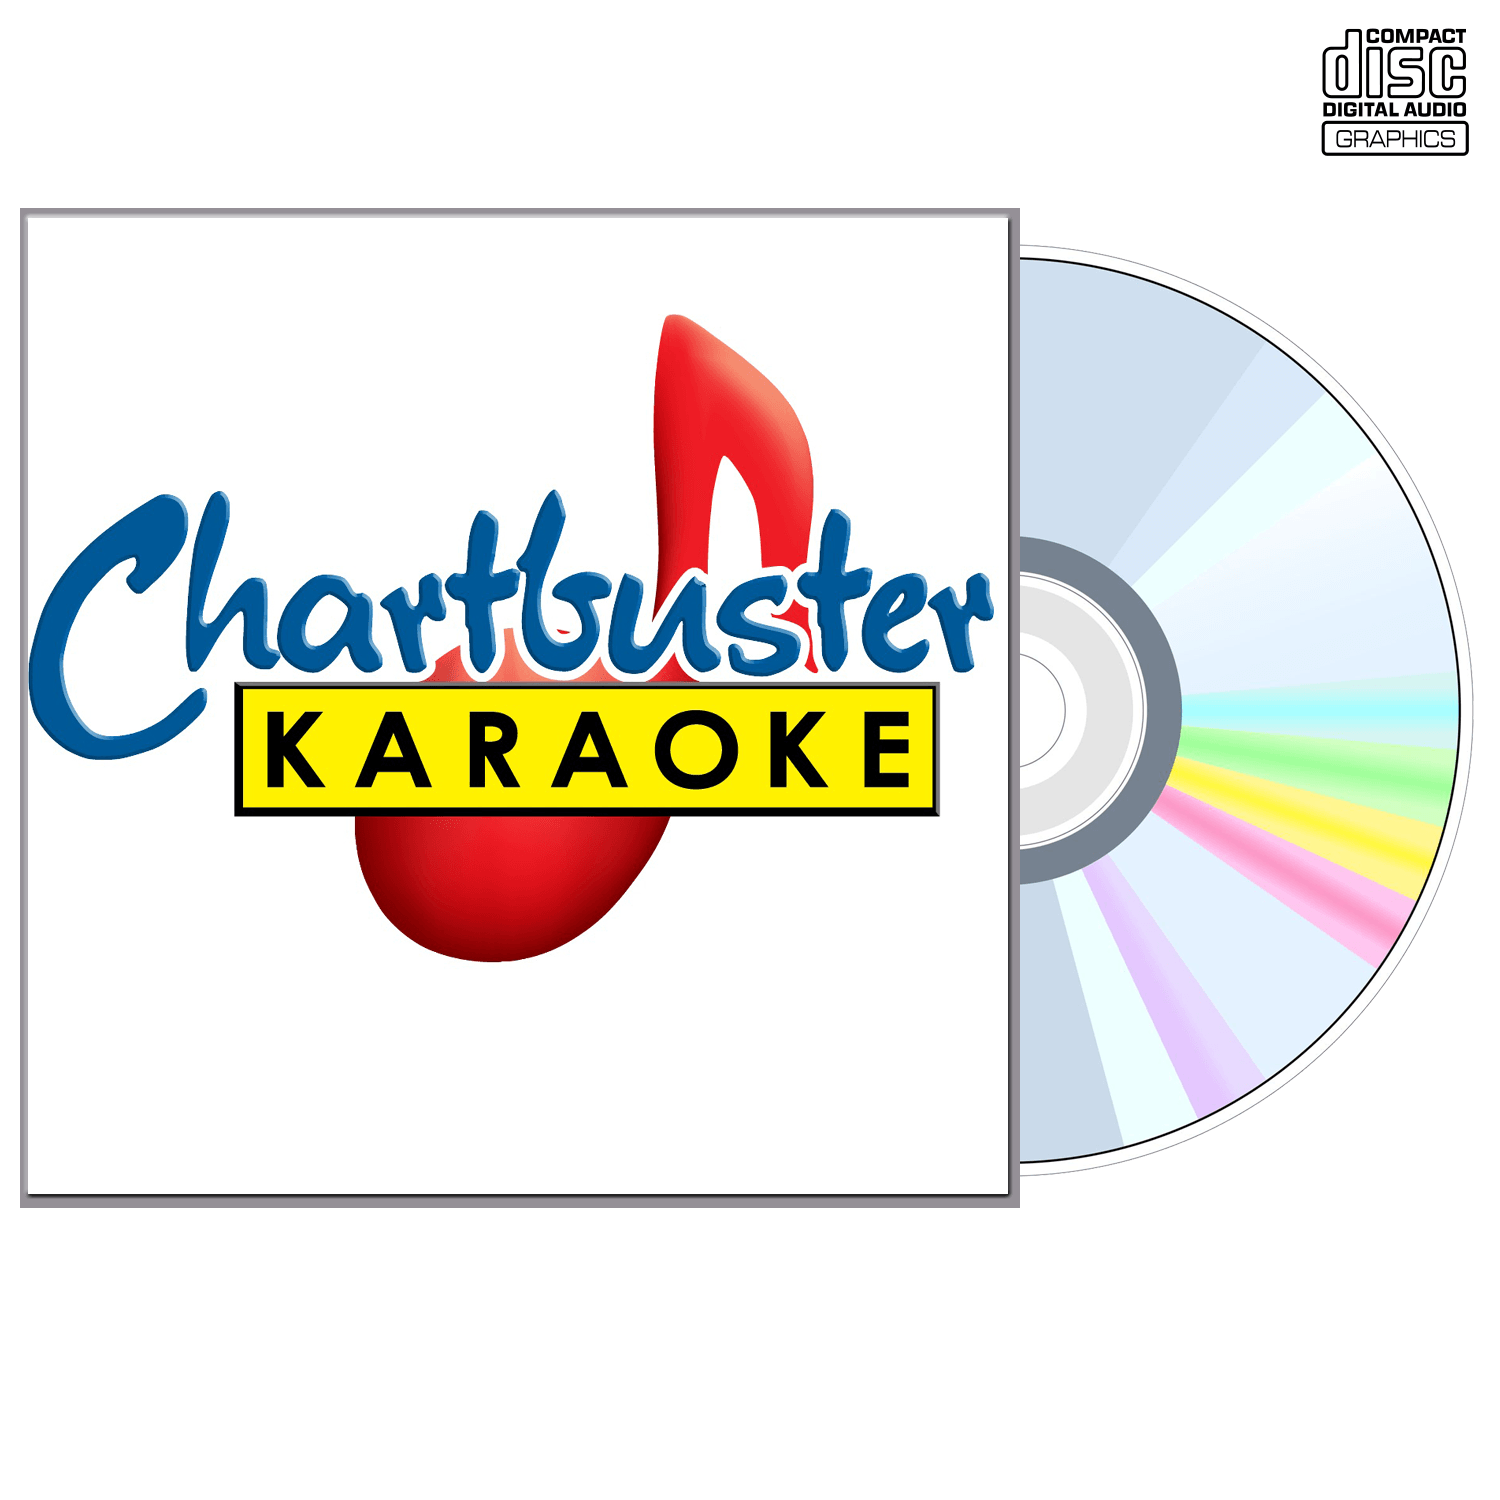 Ultimate 90's Collection Vol 15 - CD+G - Chartbuster Karaoke - Karaoke Home Entertainment